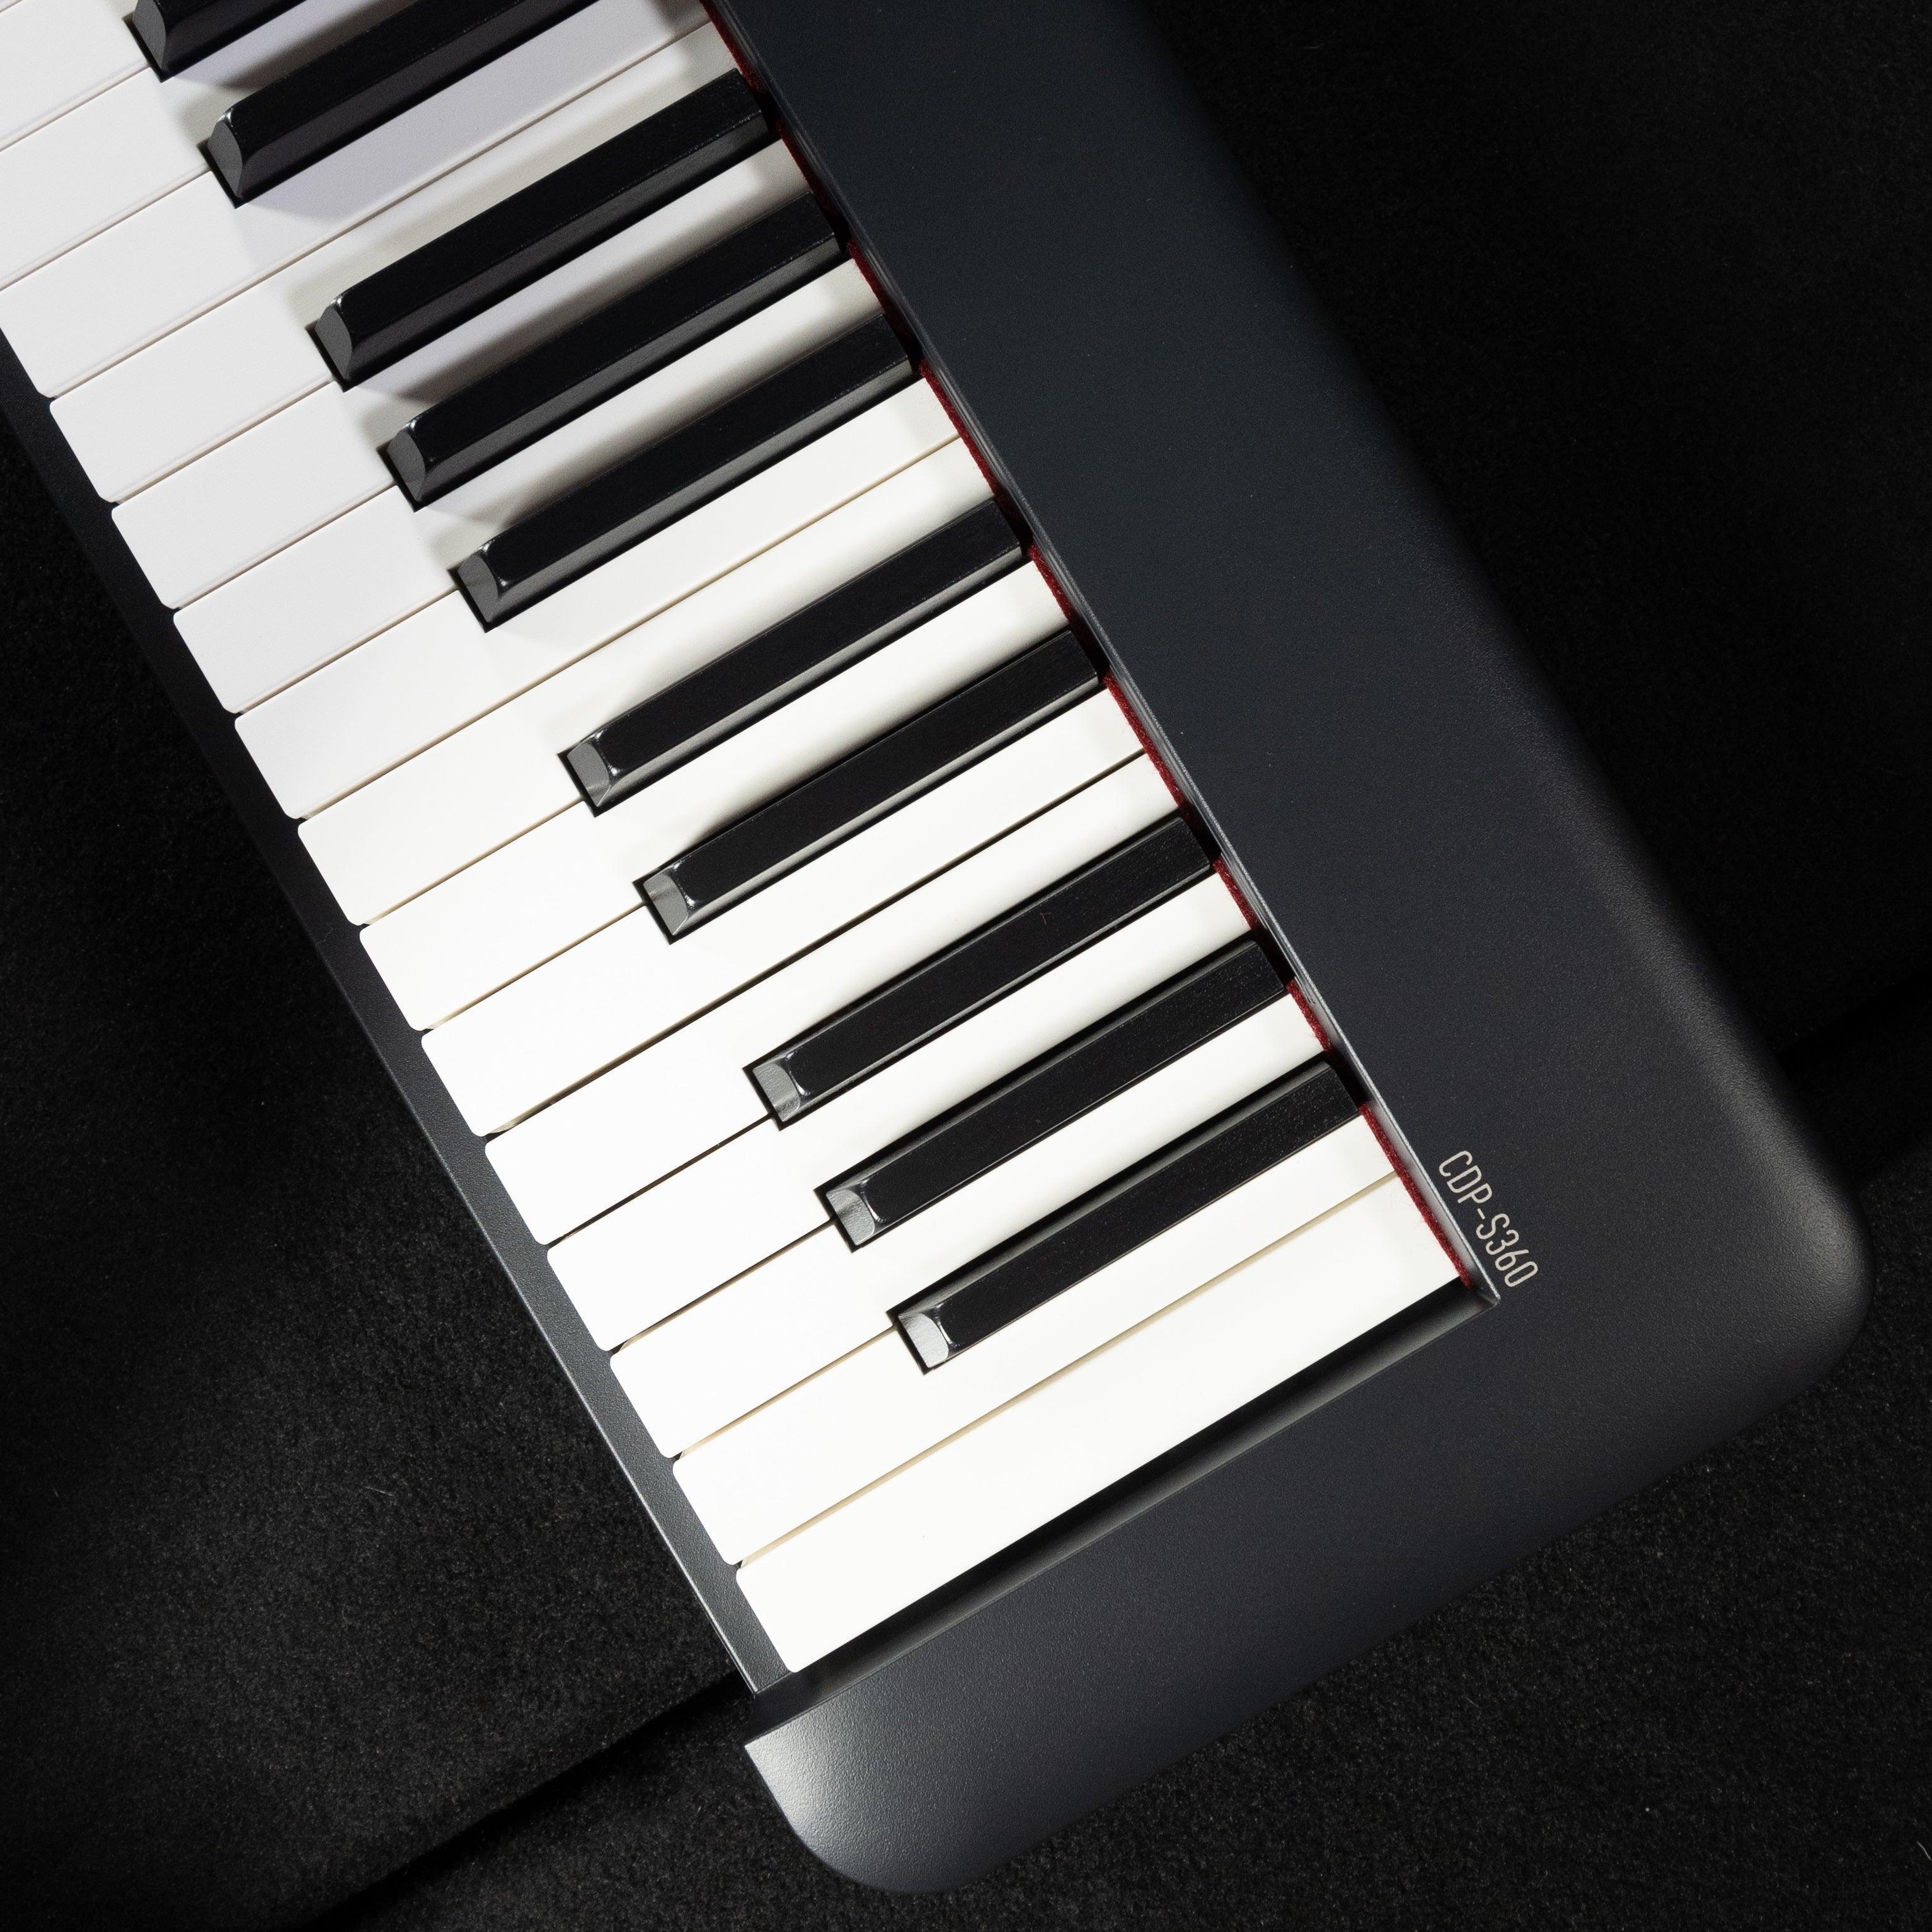 Casio CDP-S350 Digital Piano freeshipping - Impulse Music Co.